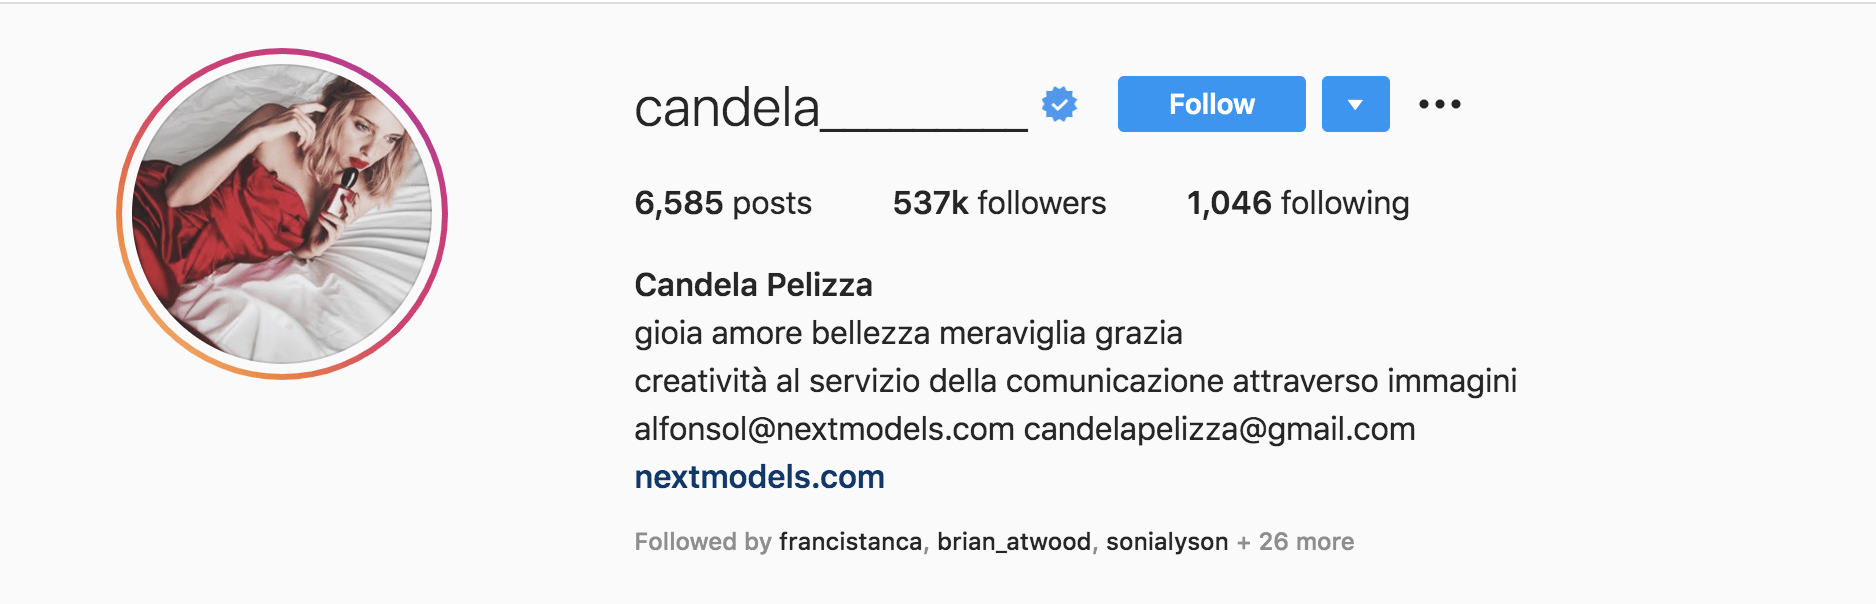 Top Fashion Influencers - Candela Pelizza